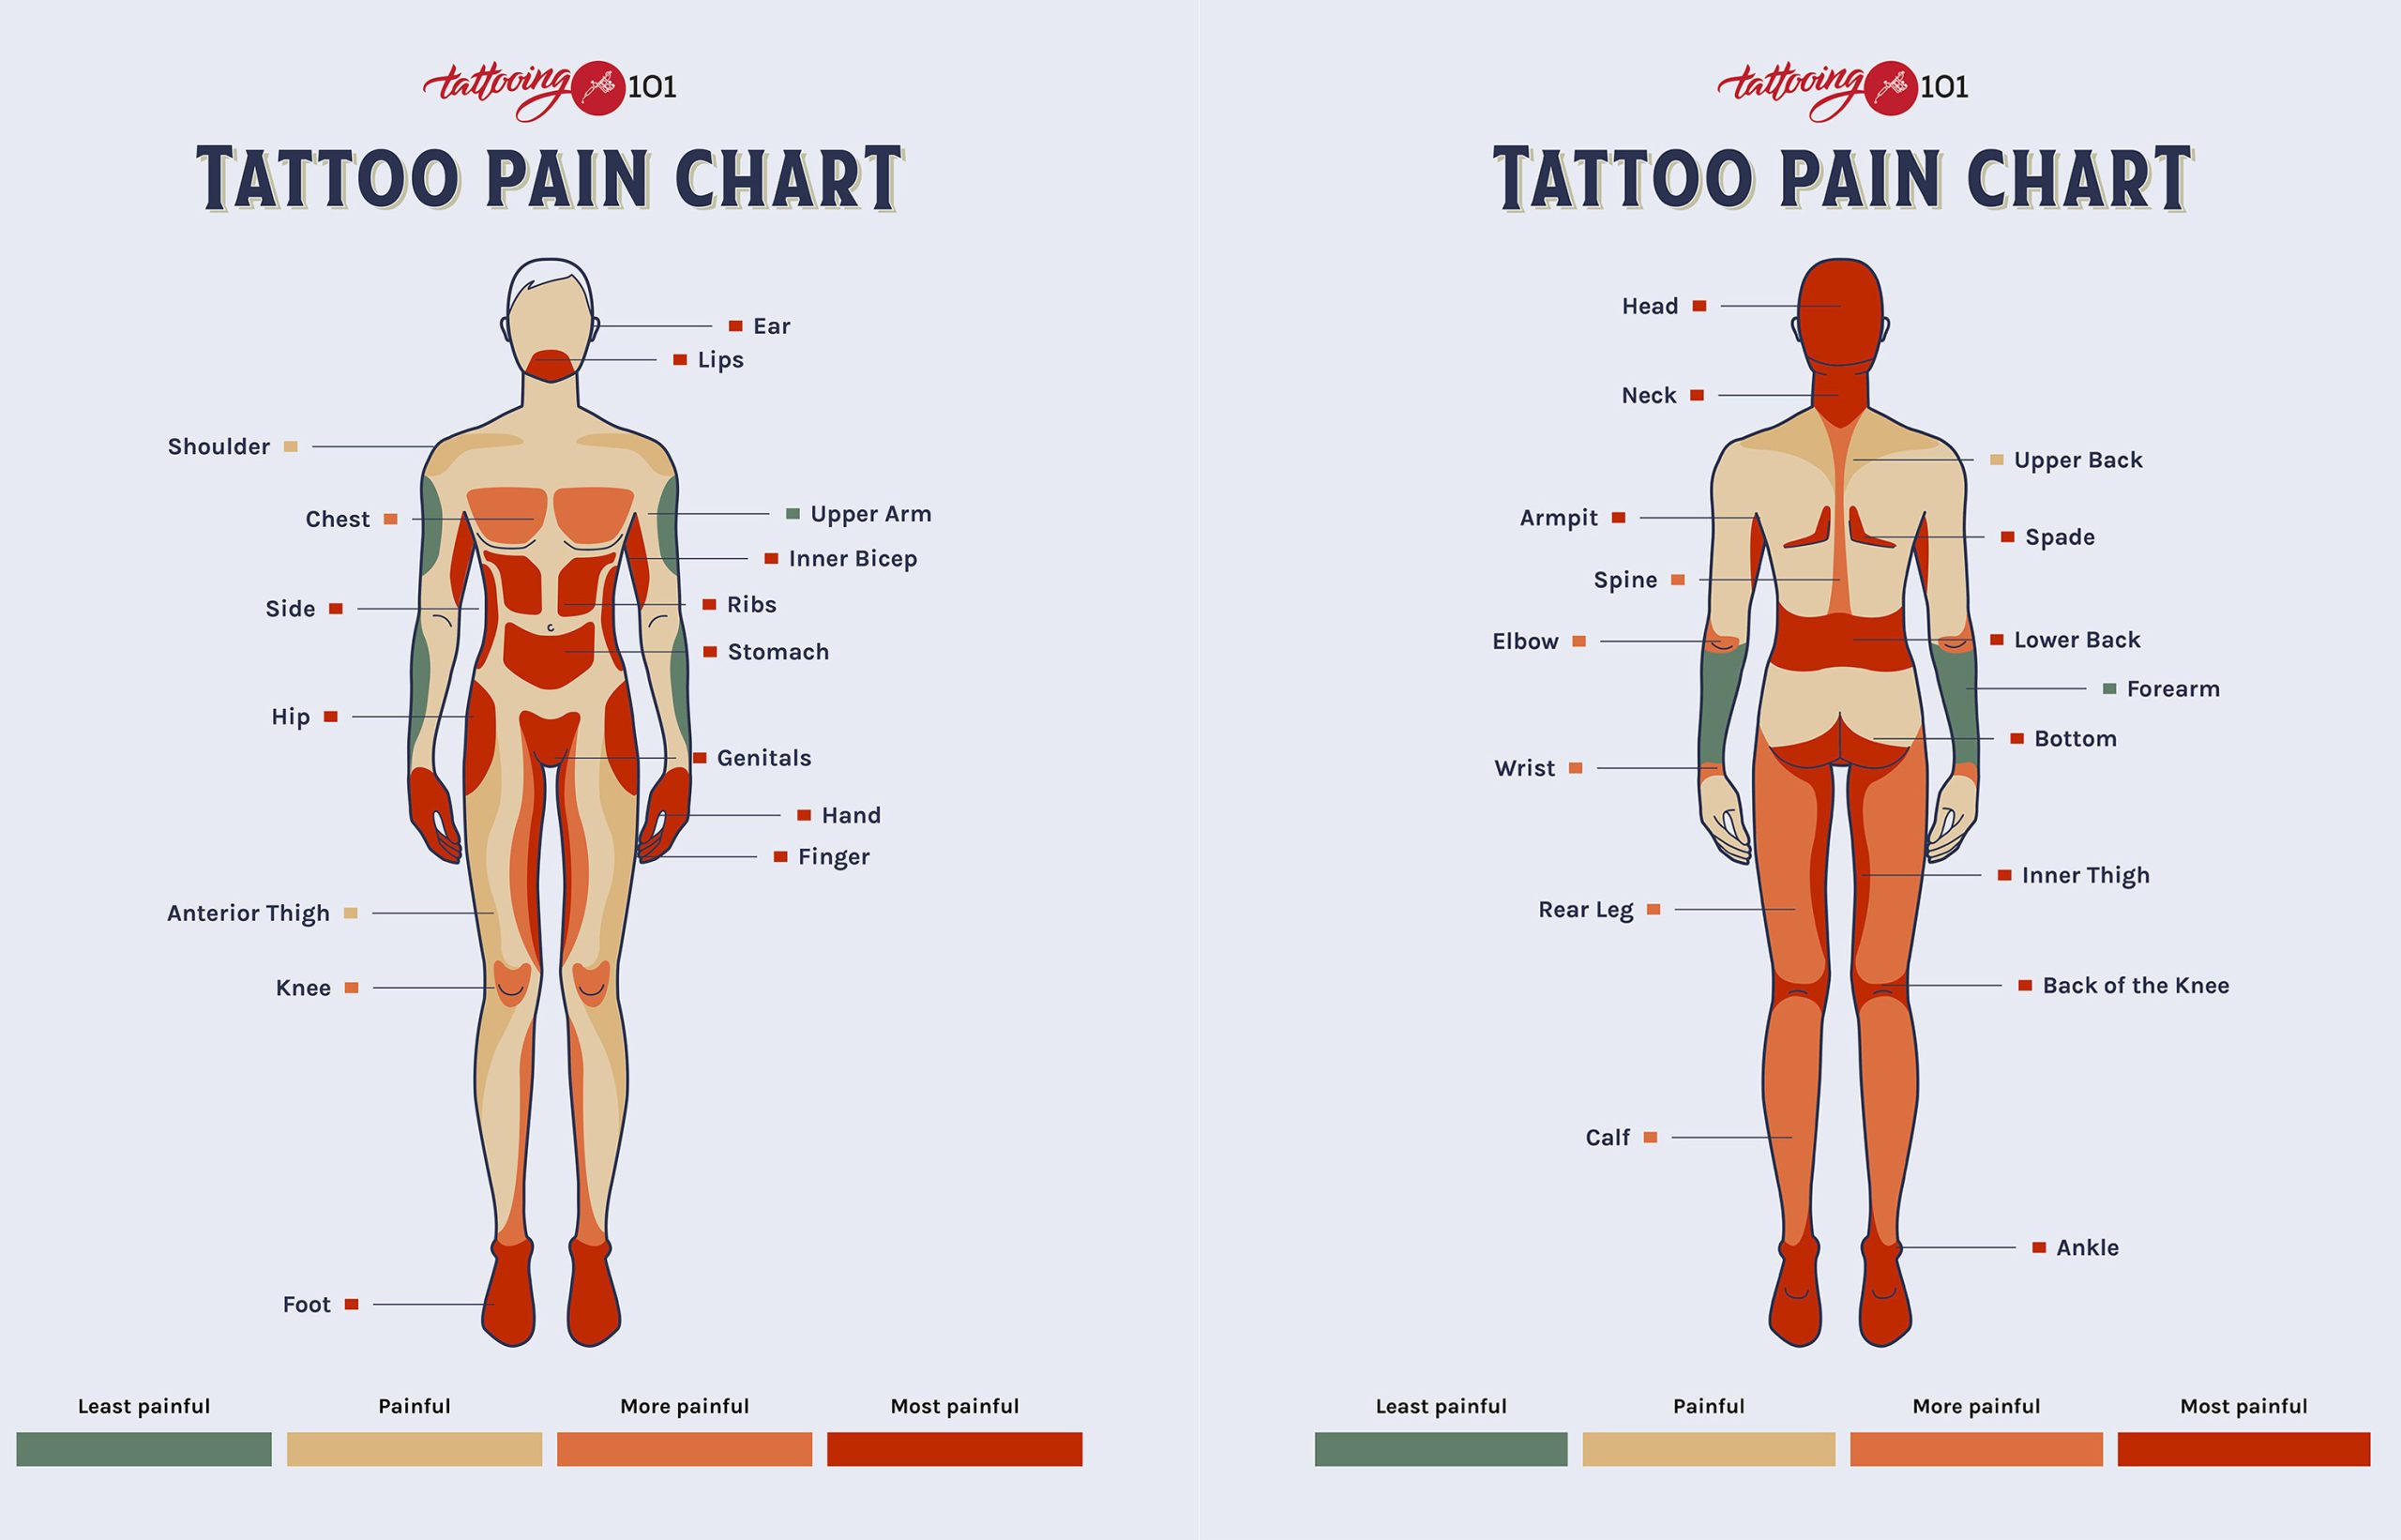 This tattoo pain chart looks weirdly menacing. : r/Pareidolia